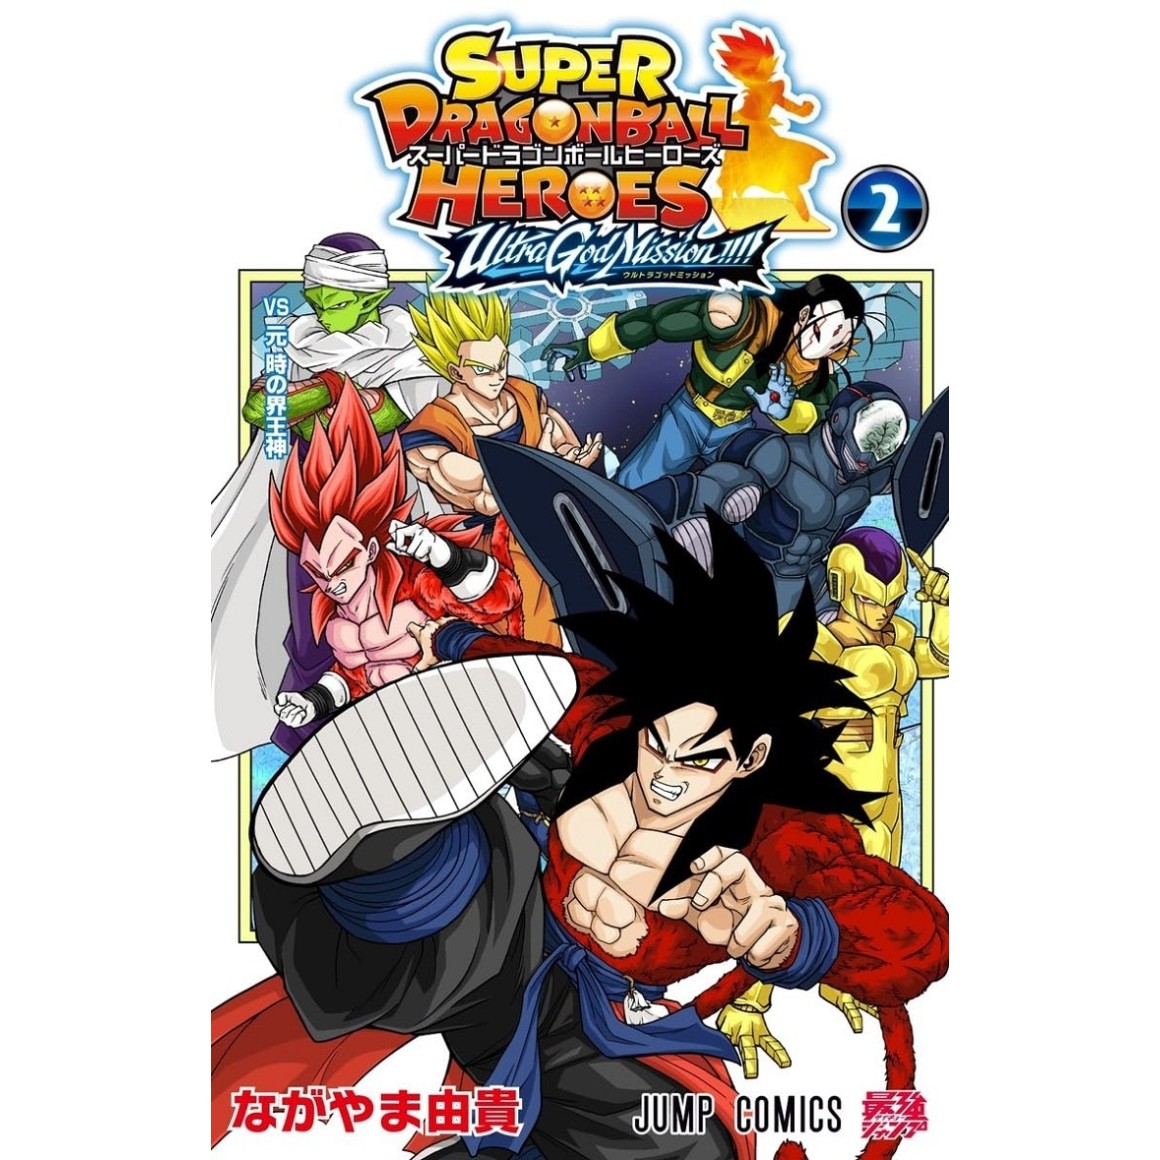 DRAGON BALL SUPER Super Hero (Anime Comic) - Edição Japonesa